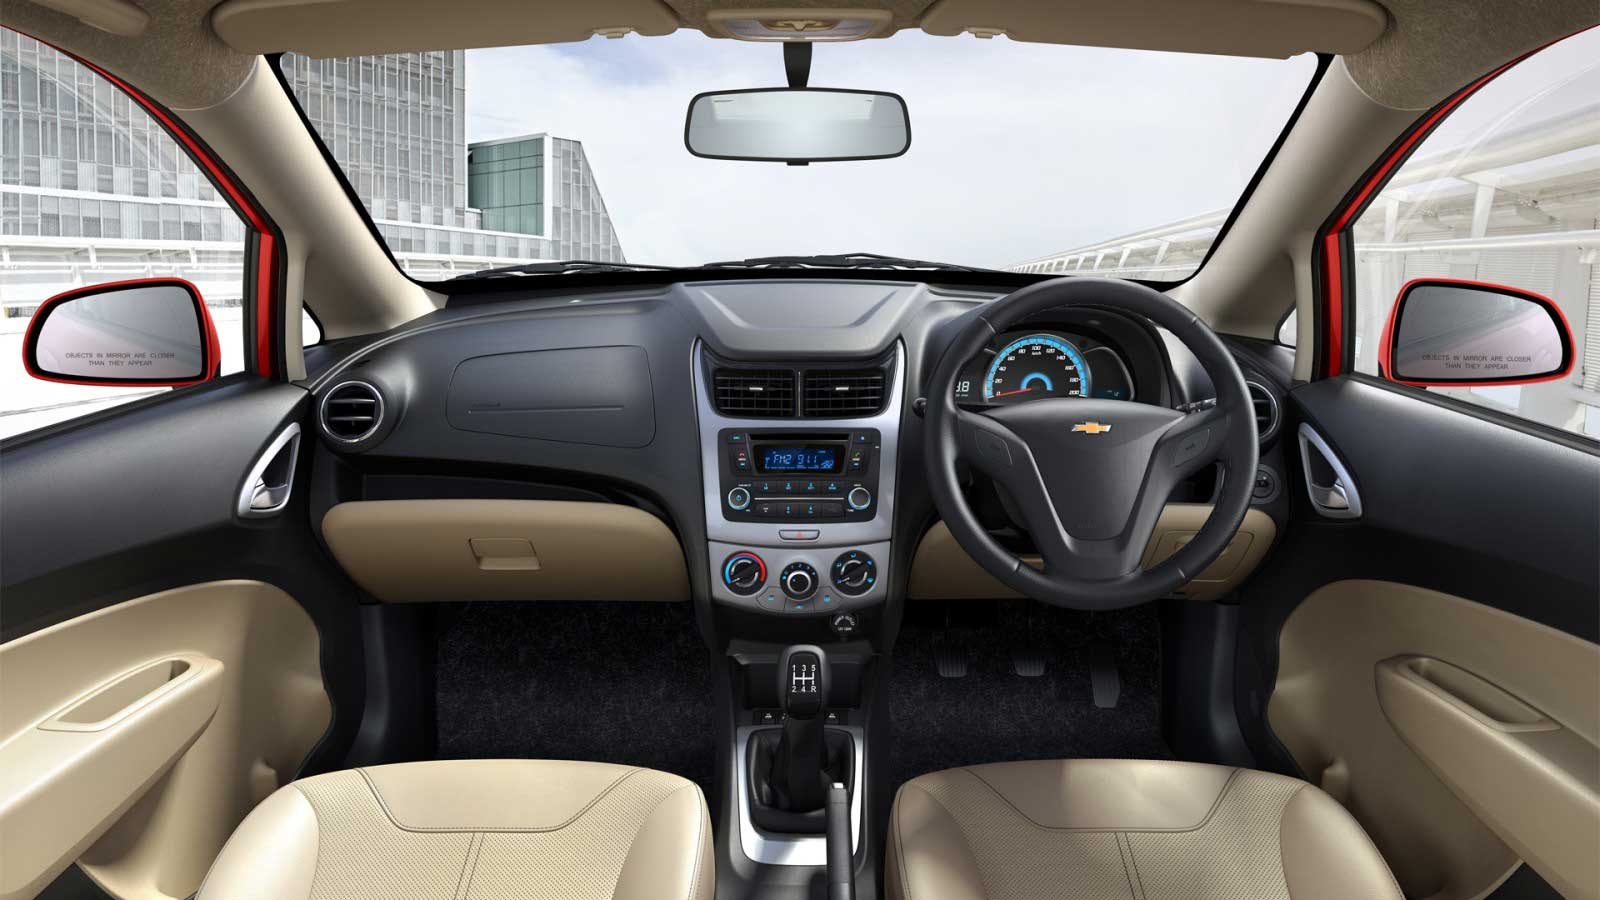 Chevrolet Sail Hatchback 1.3 LS ABS Interior front view